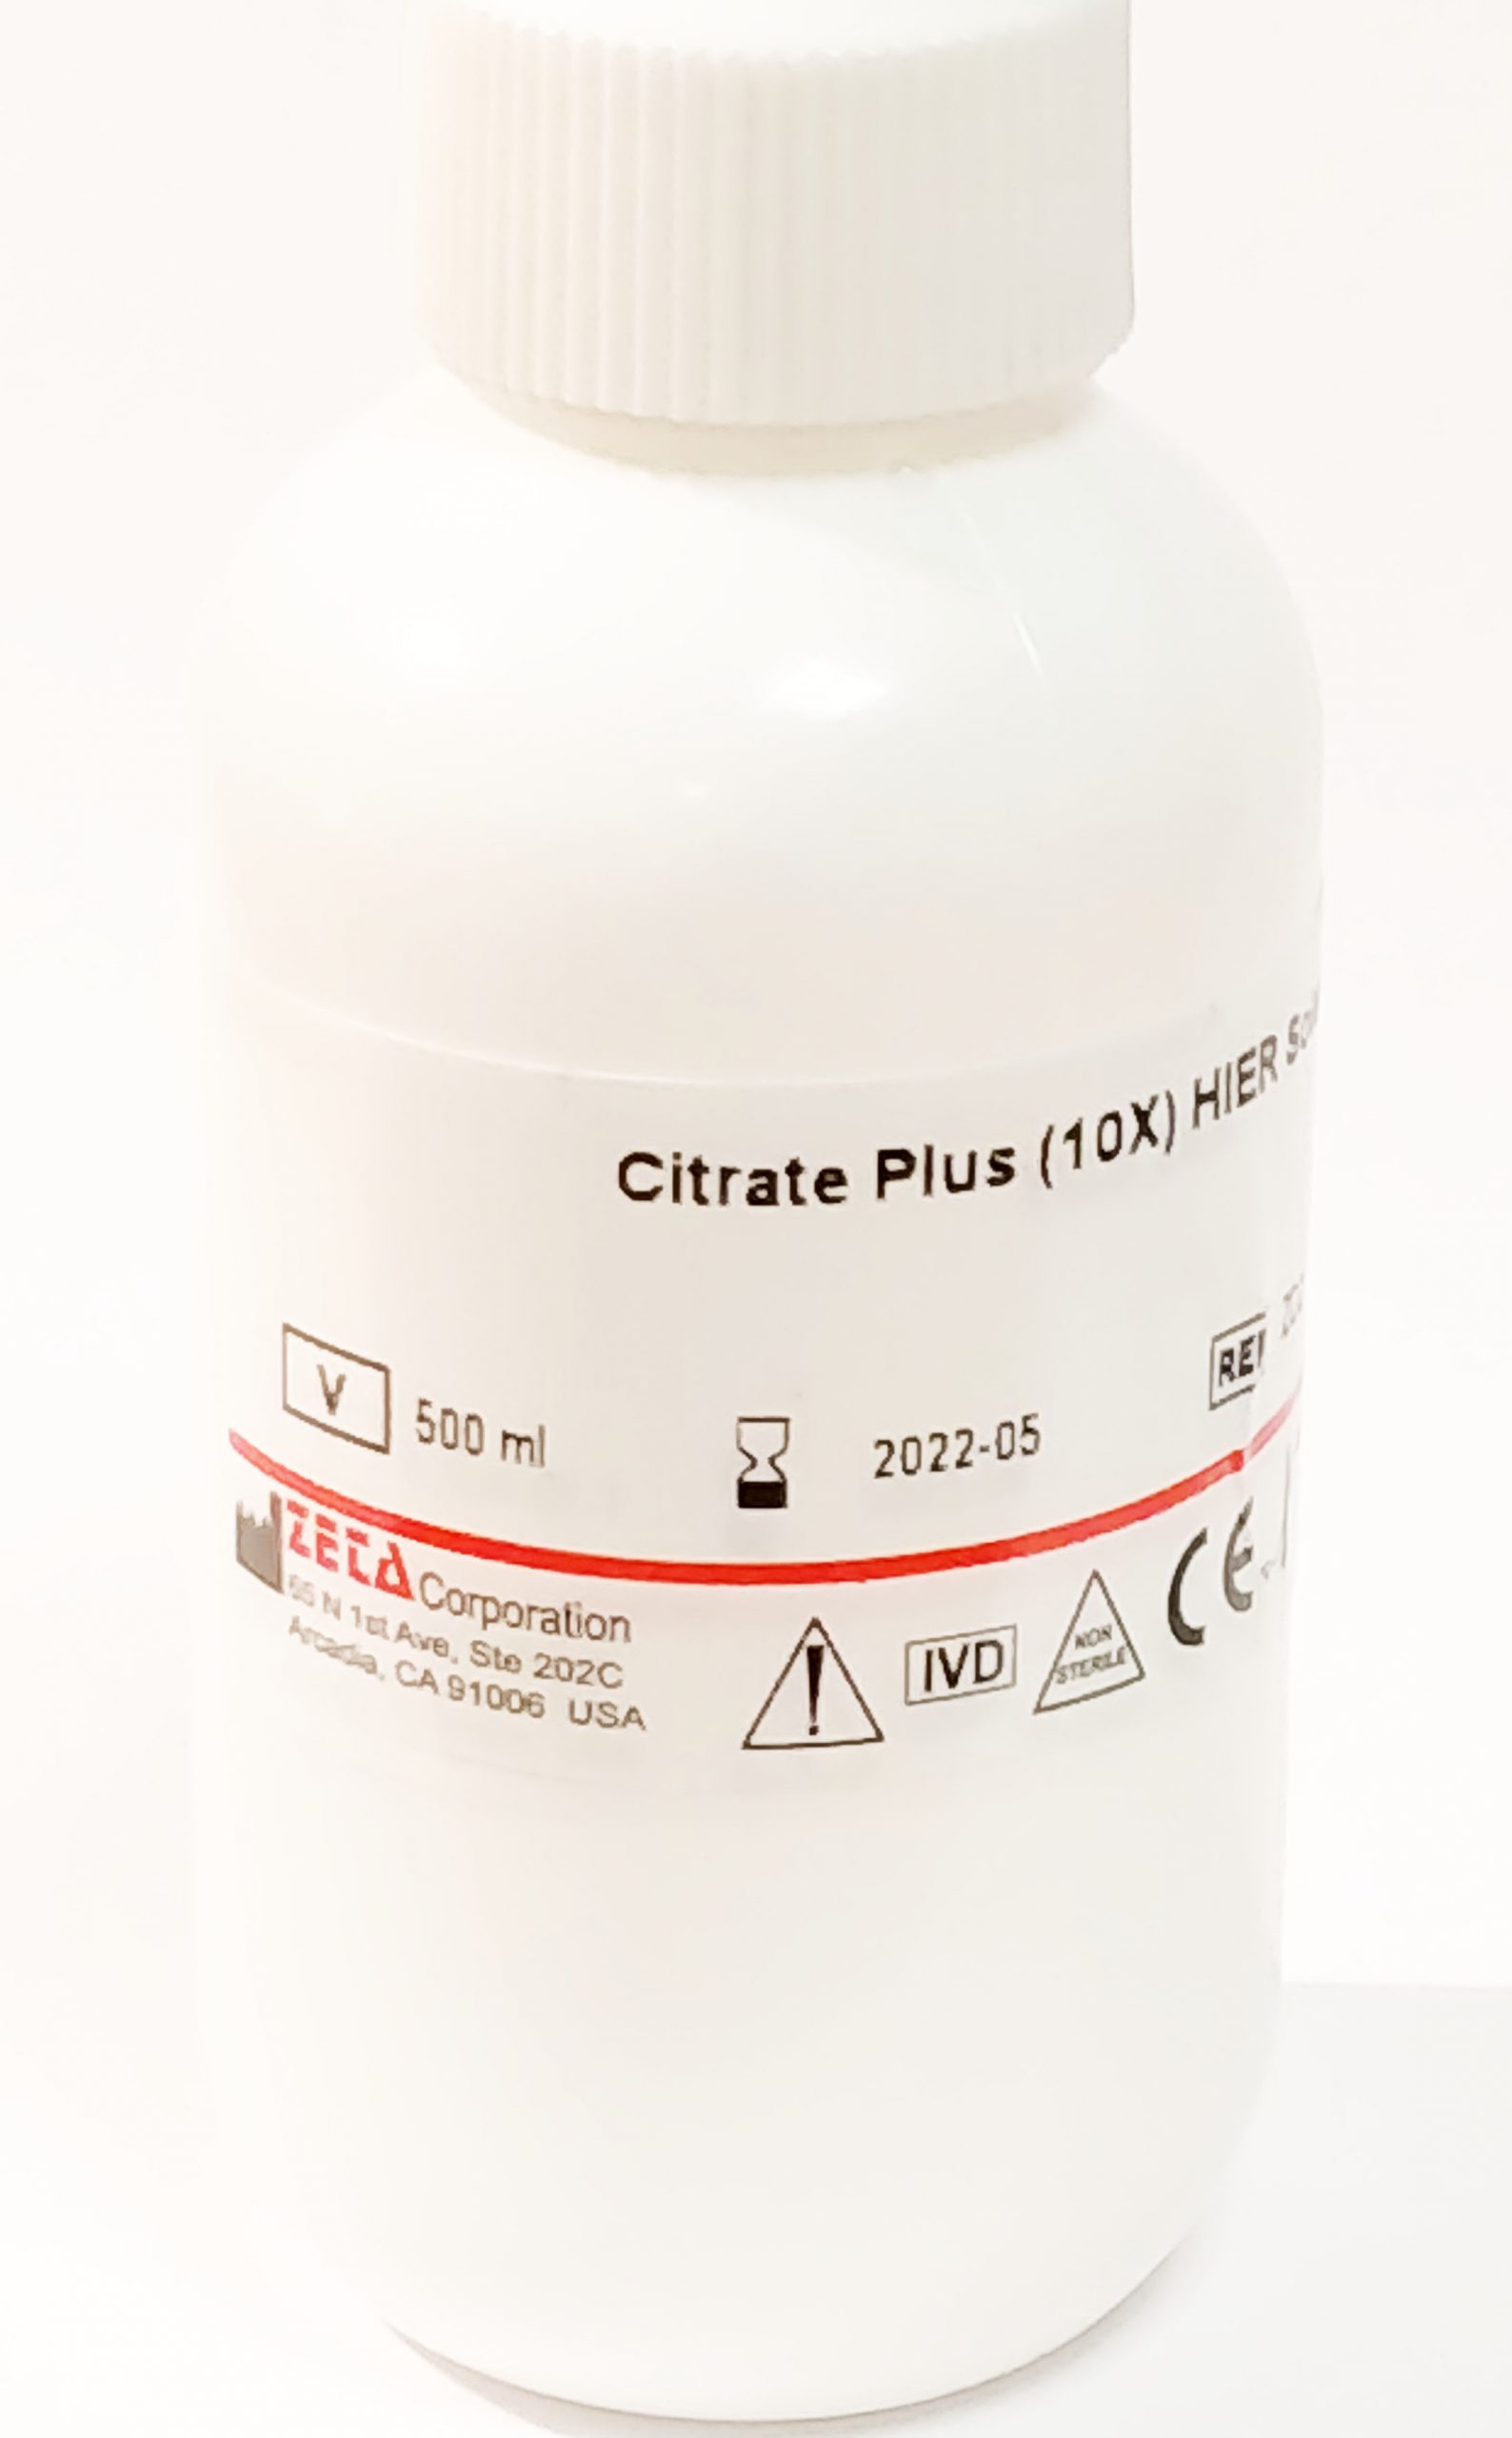 Zeta Citrate Plus (10X) HIER Solution – Zeta Corporation